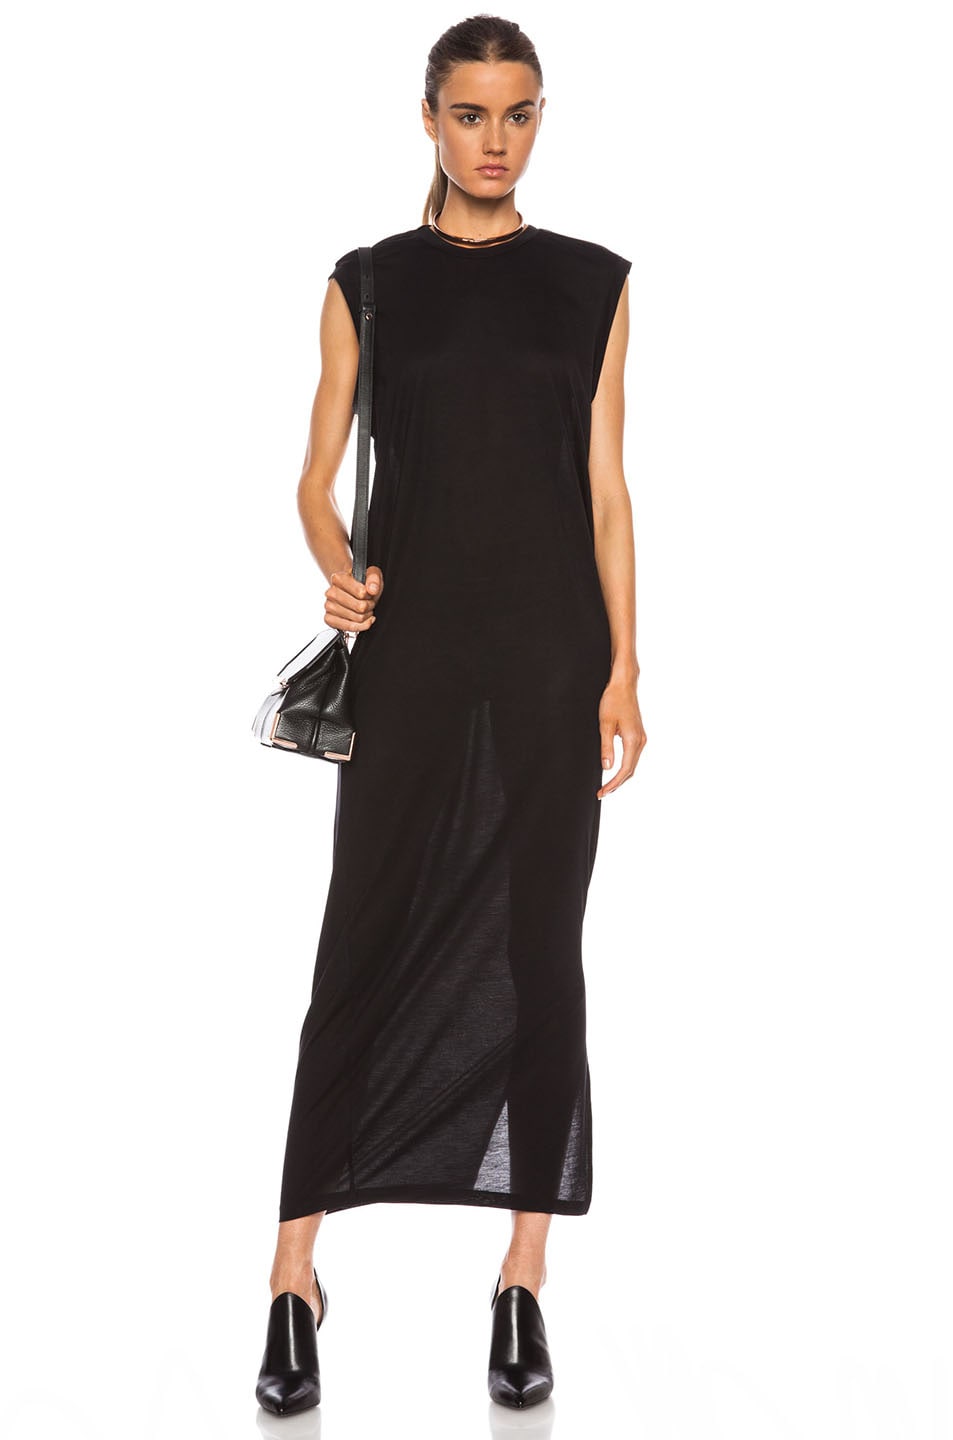 Acne Studios Bree Fluid Viscose Dress in Black | FWRD